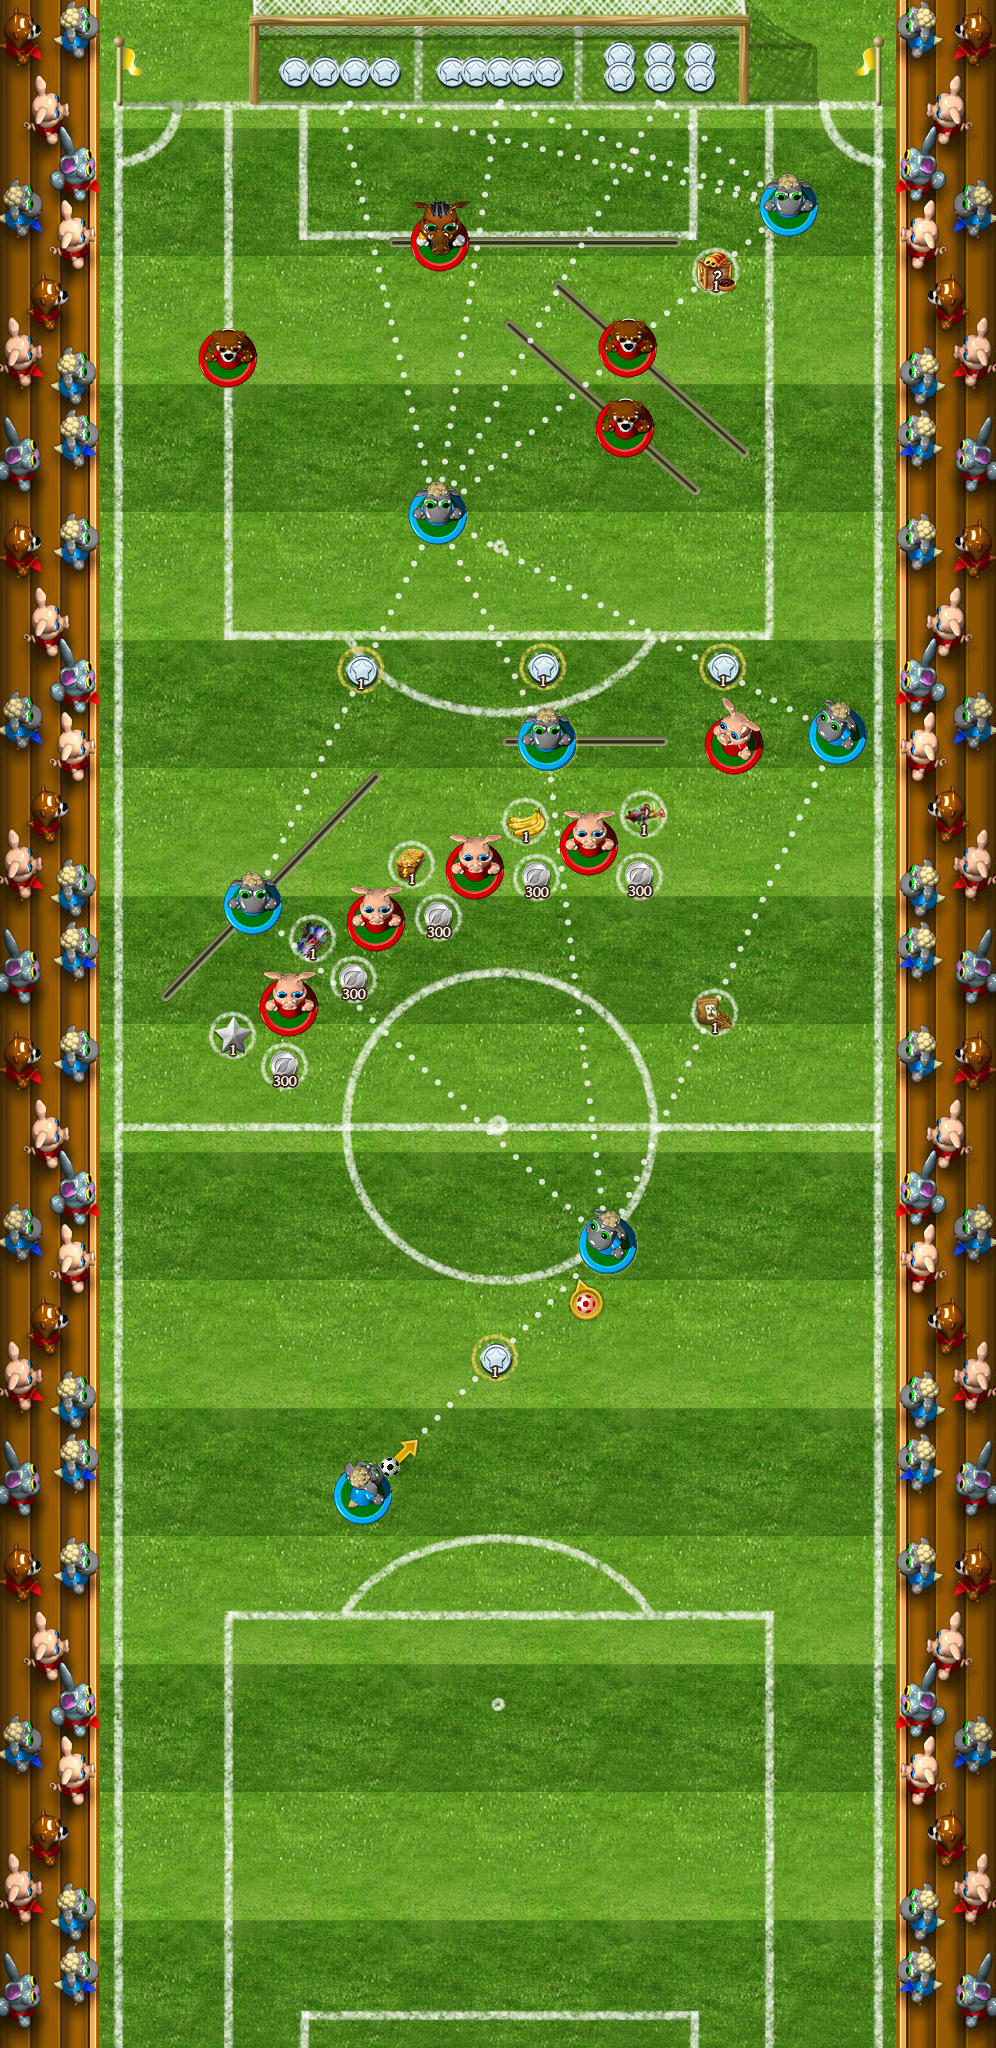 soccerjul2019_layout3.png